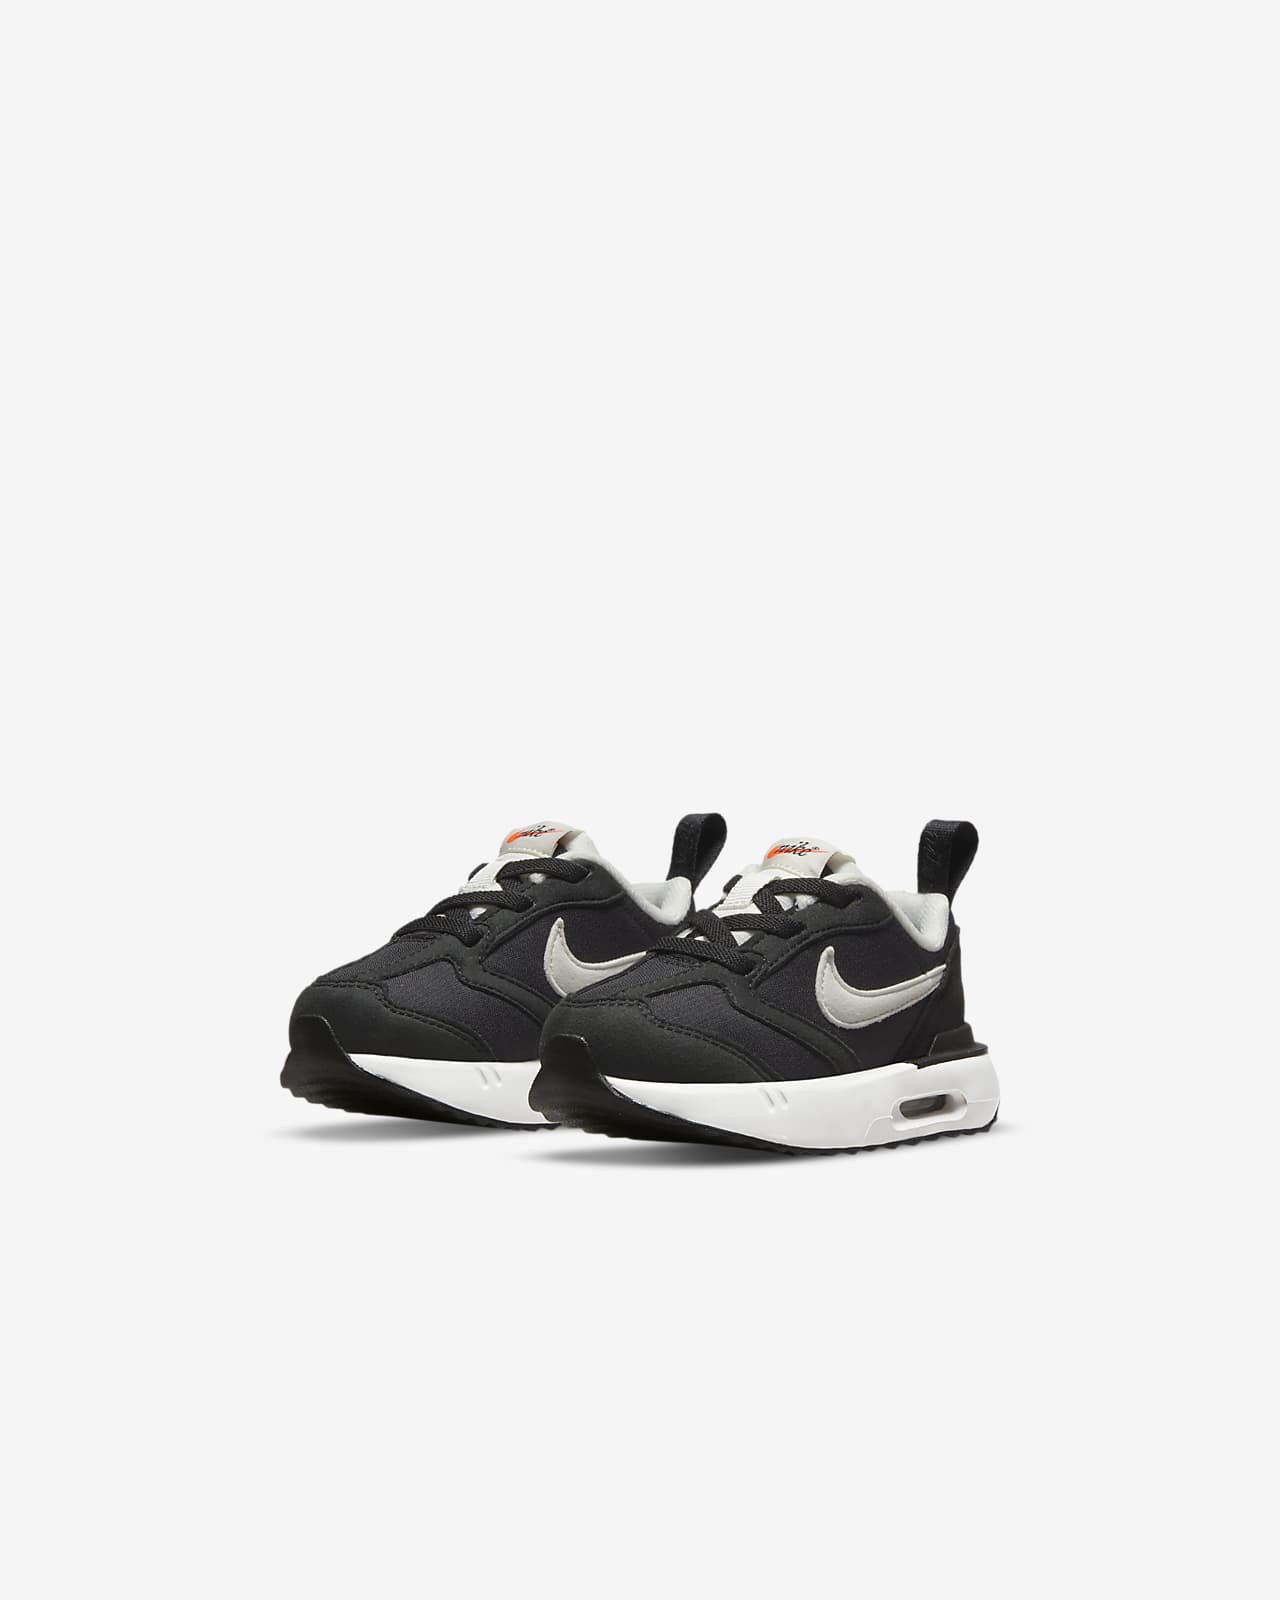 Nike Air Max Dawn sneakers in white/black